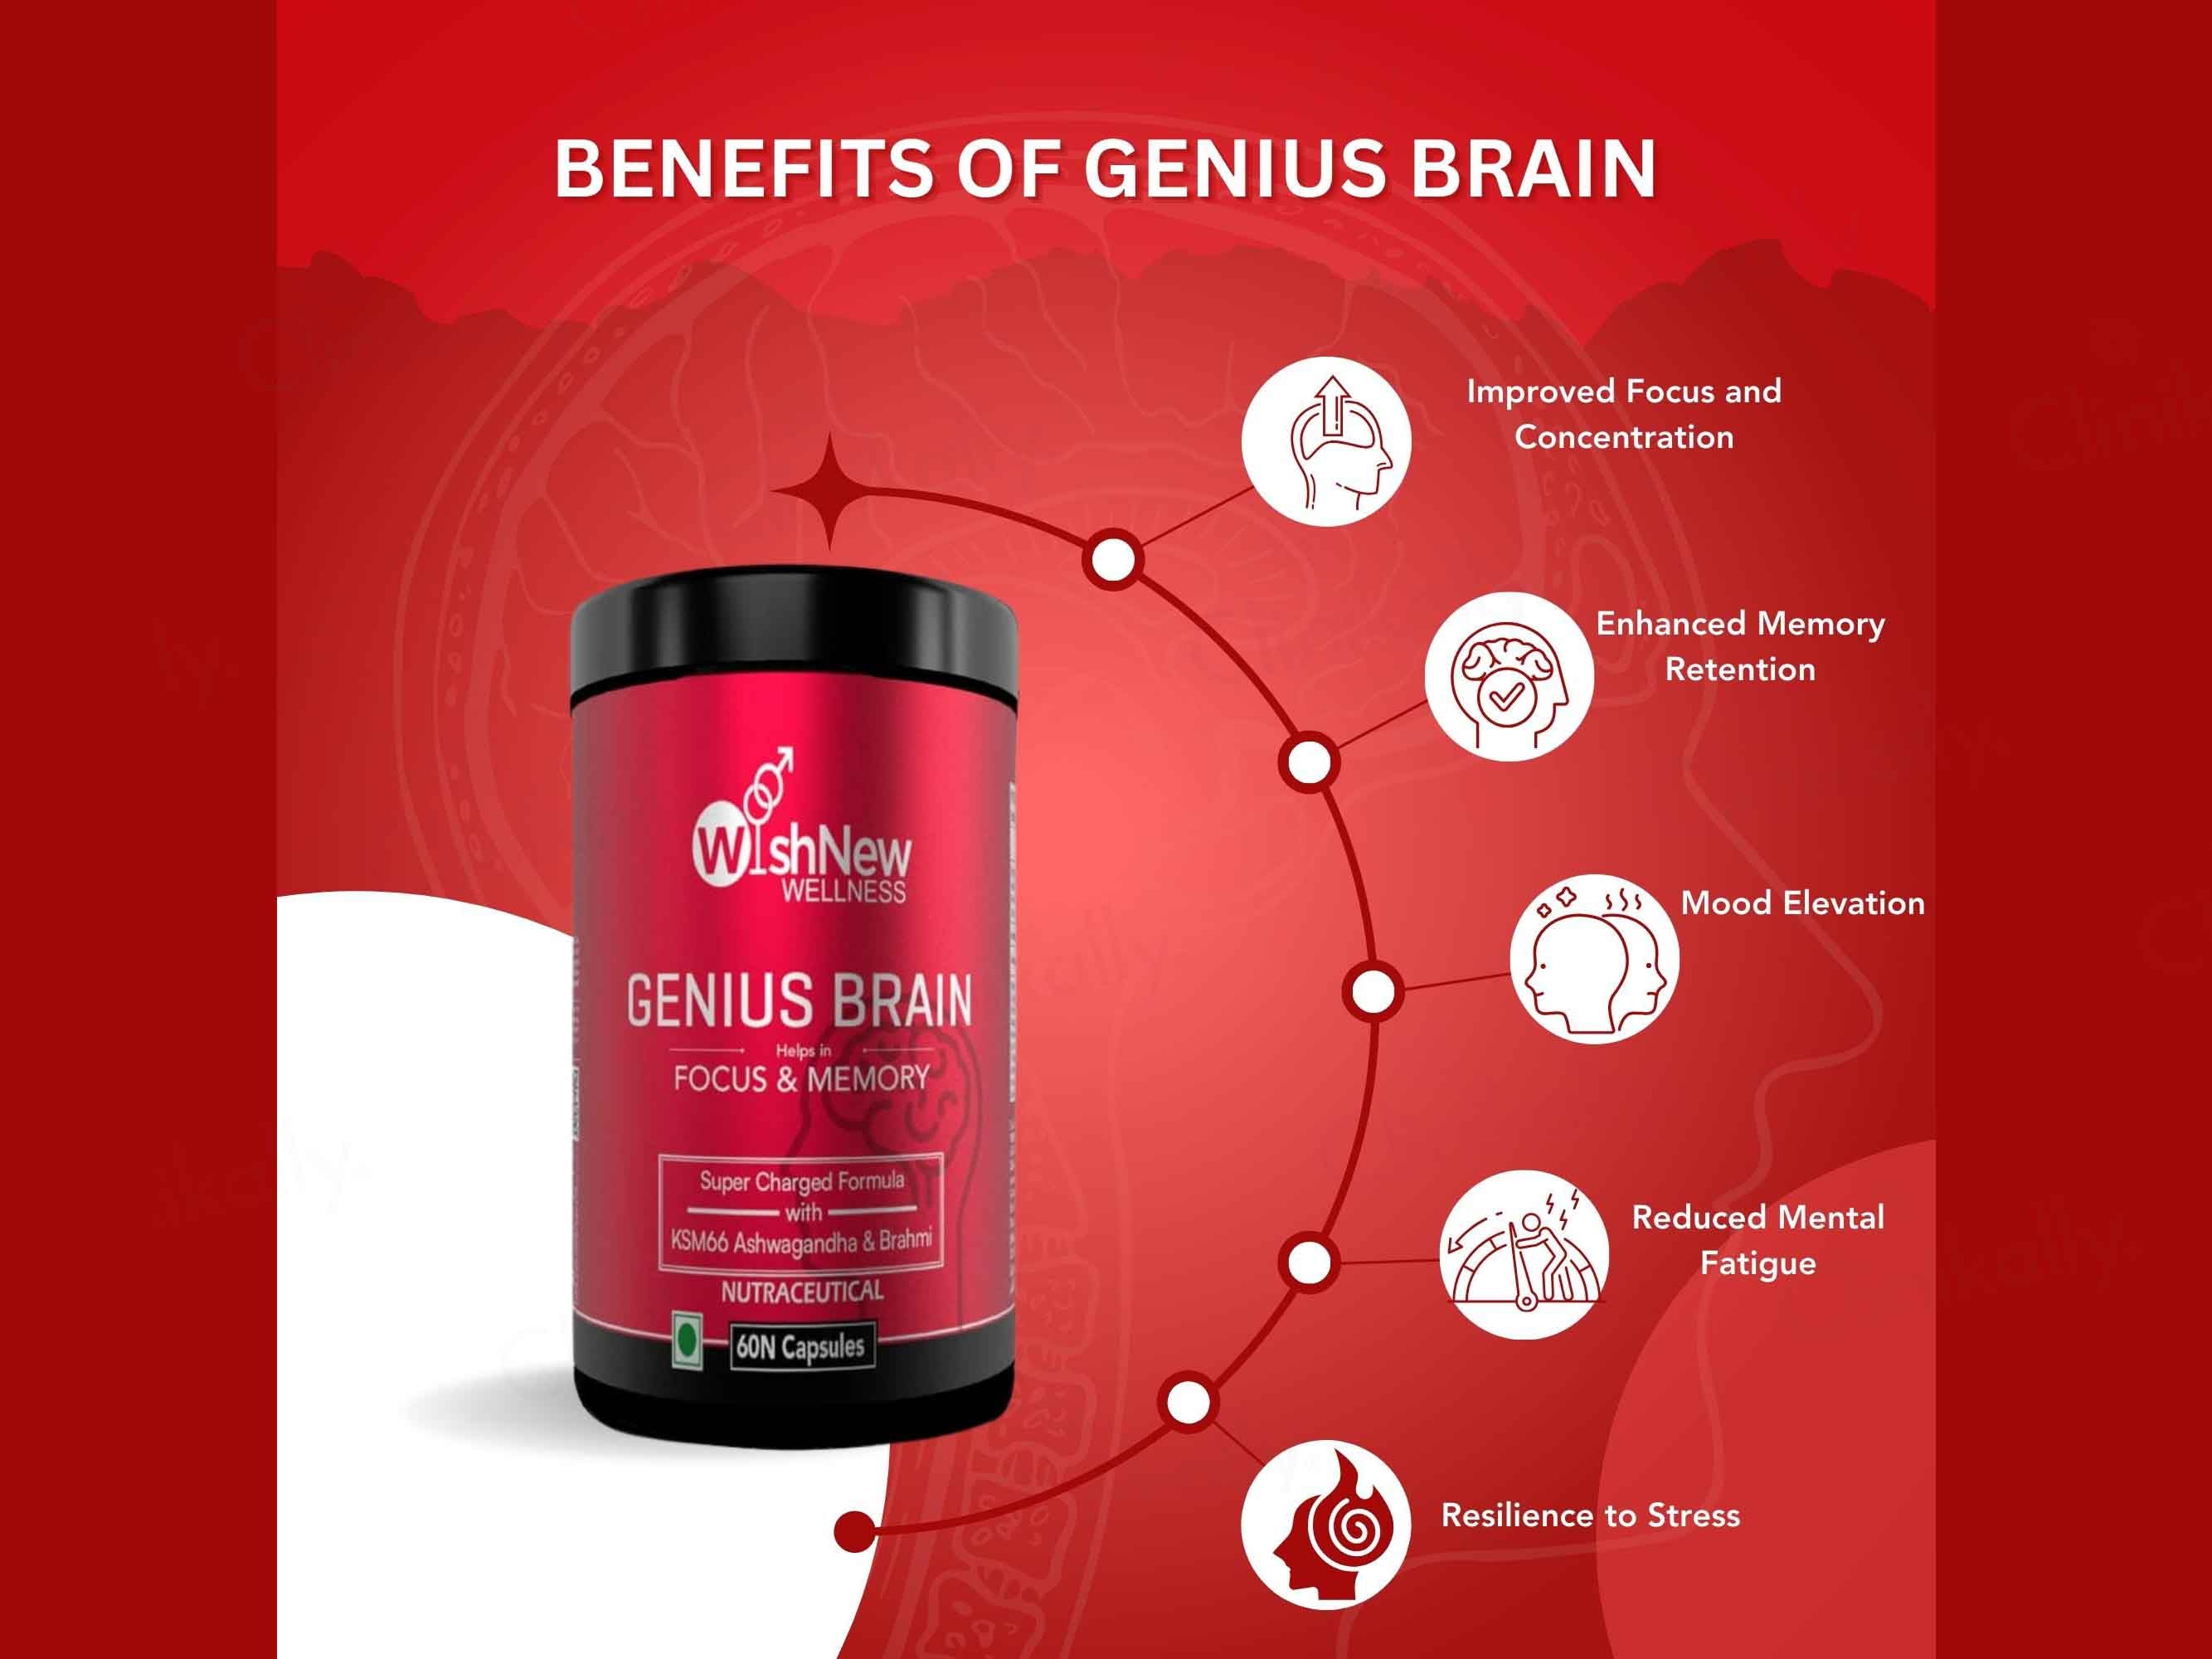 WishNew Wellness Genius Brain Focus & Memory Capsule